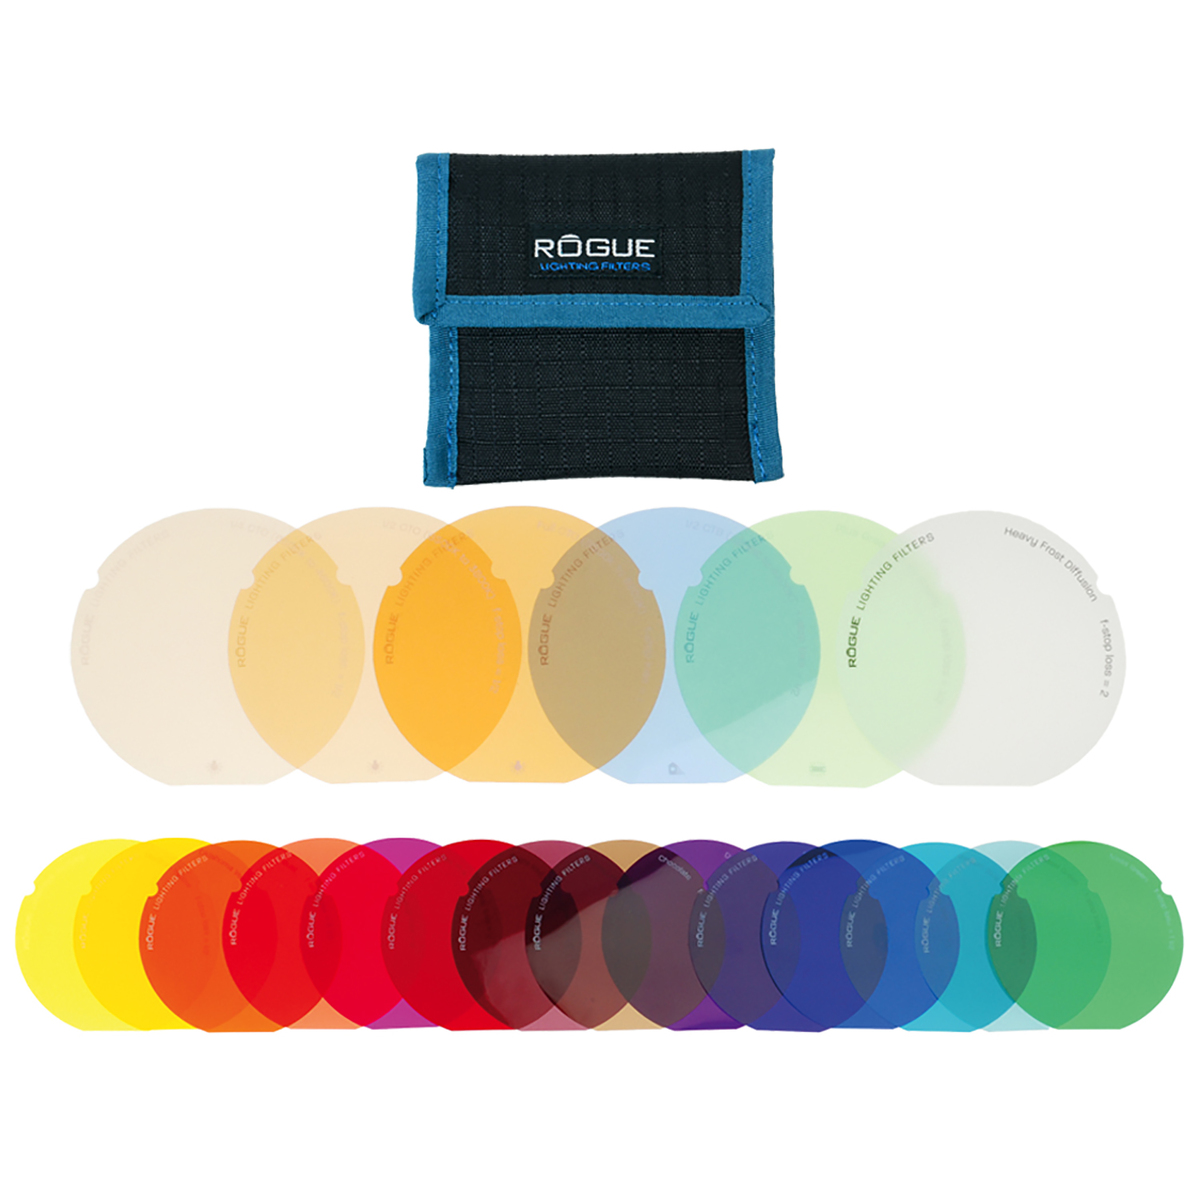 Rogue Grid Folien Combo Filter Set mit 20 Farben